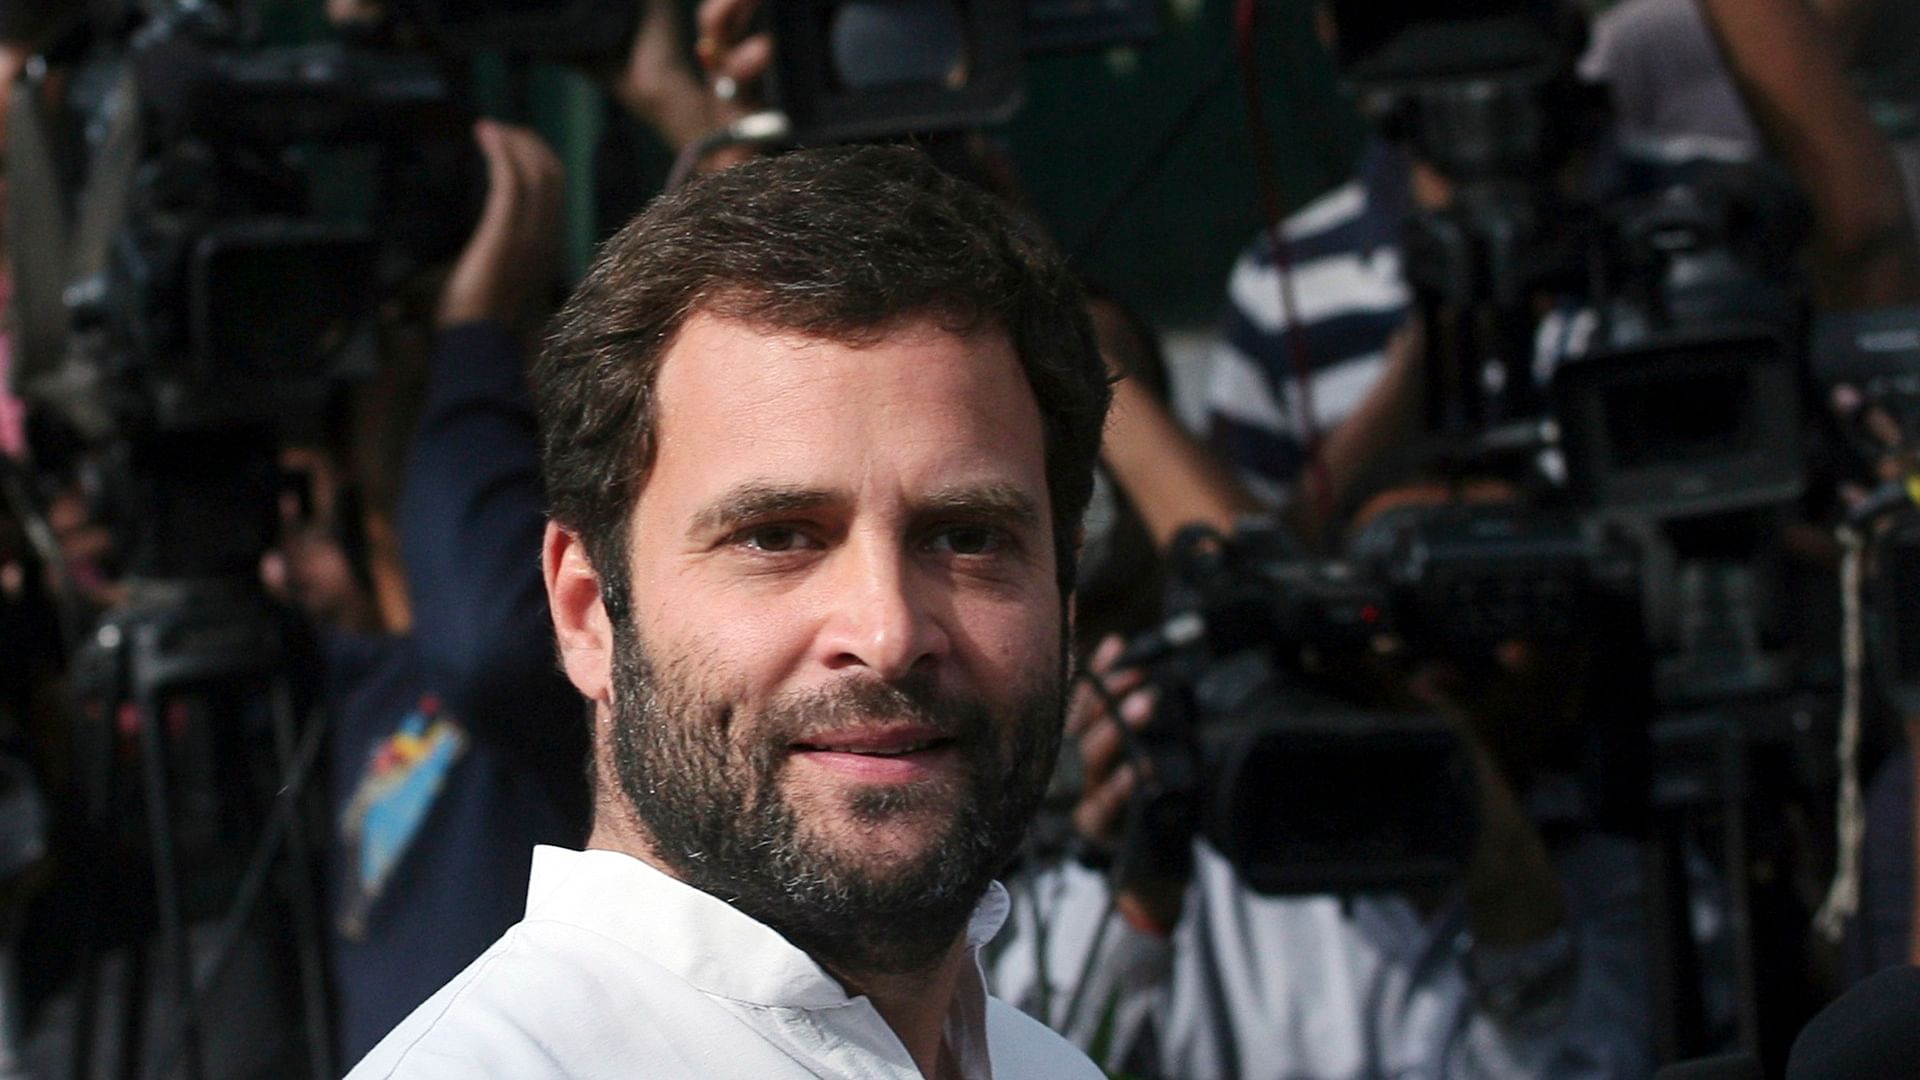 Congress Vice President Rahul Gandhi. (Photo: Reuters)